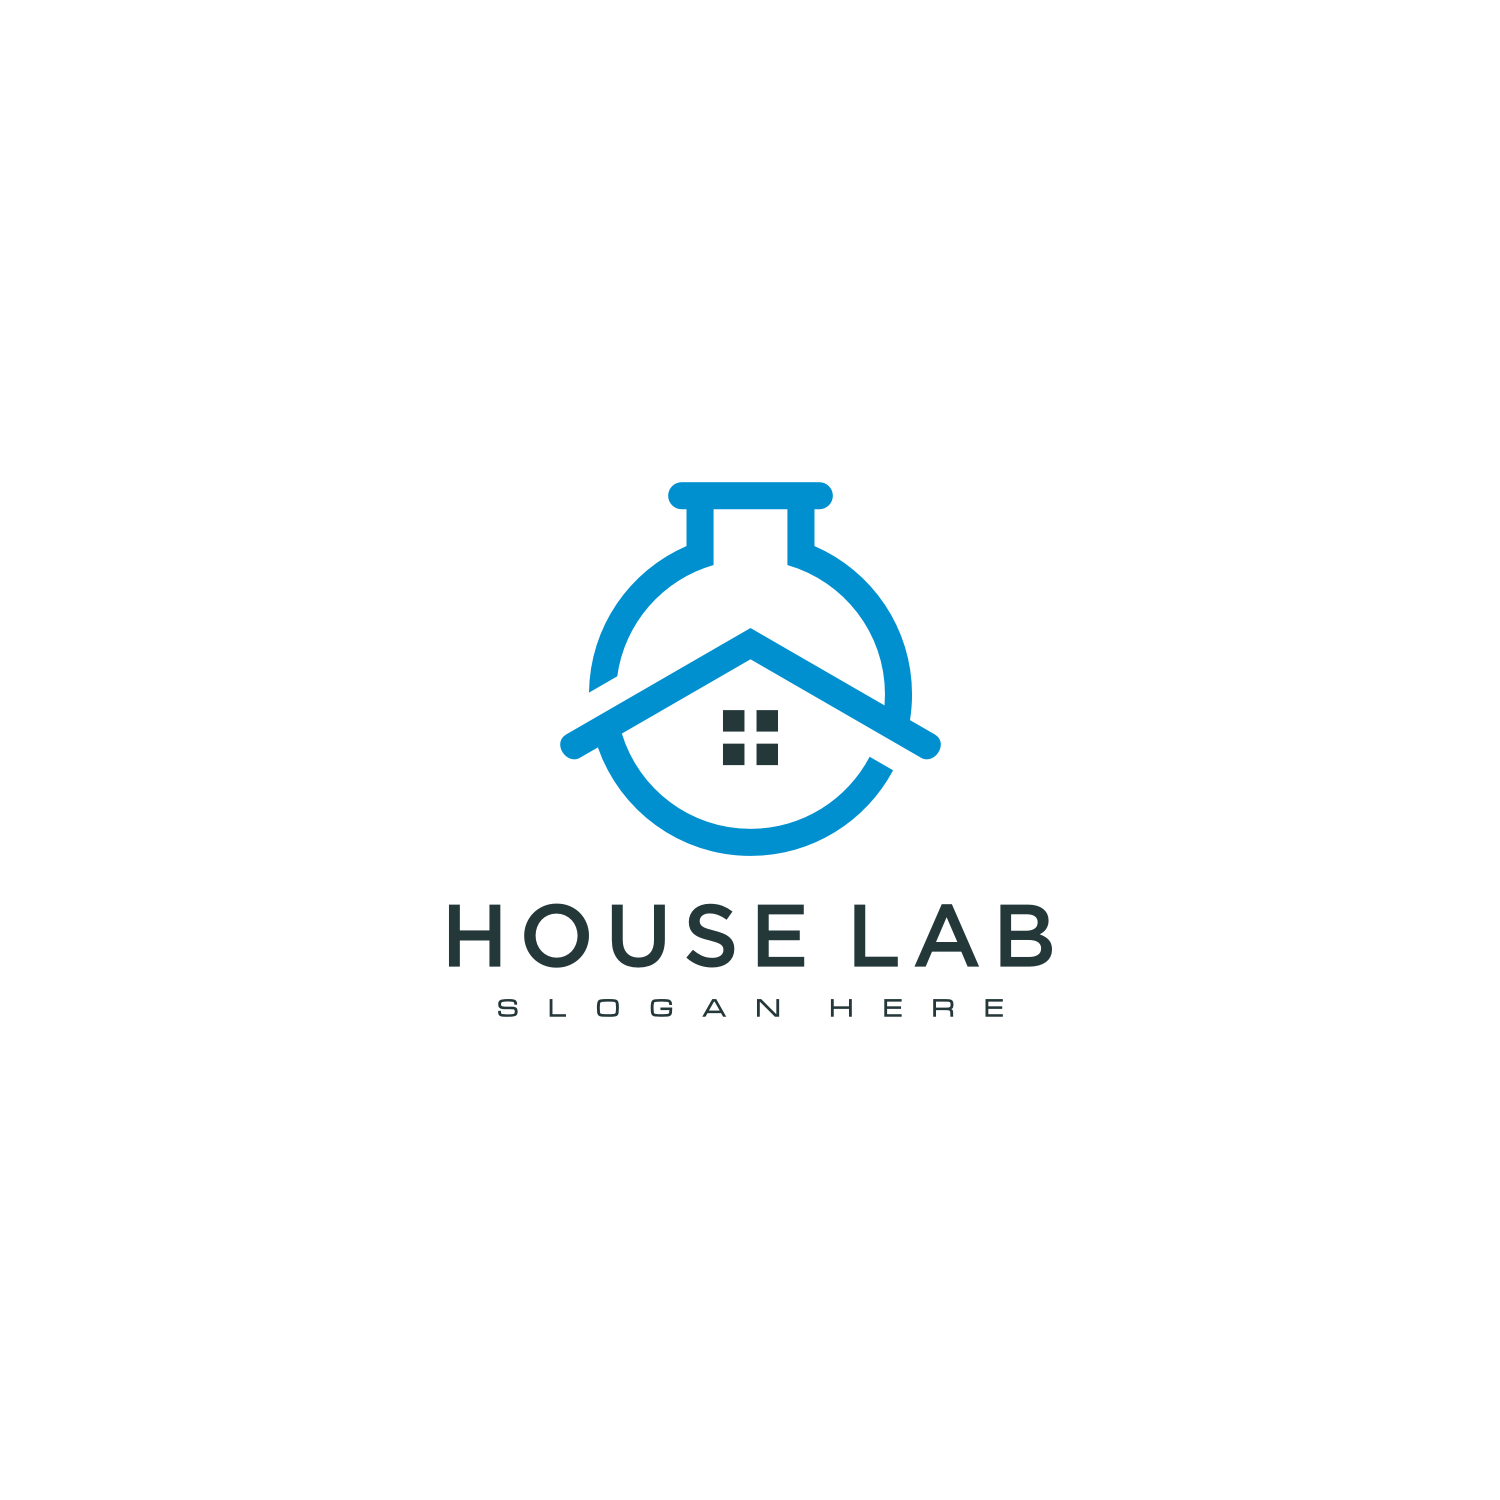 House Lab Home Laboratory Logo Cover Image.